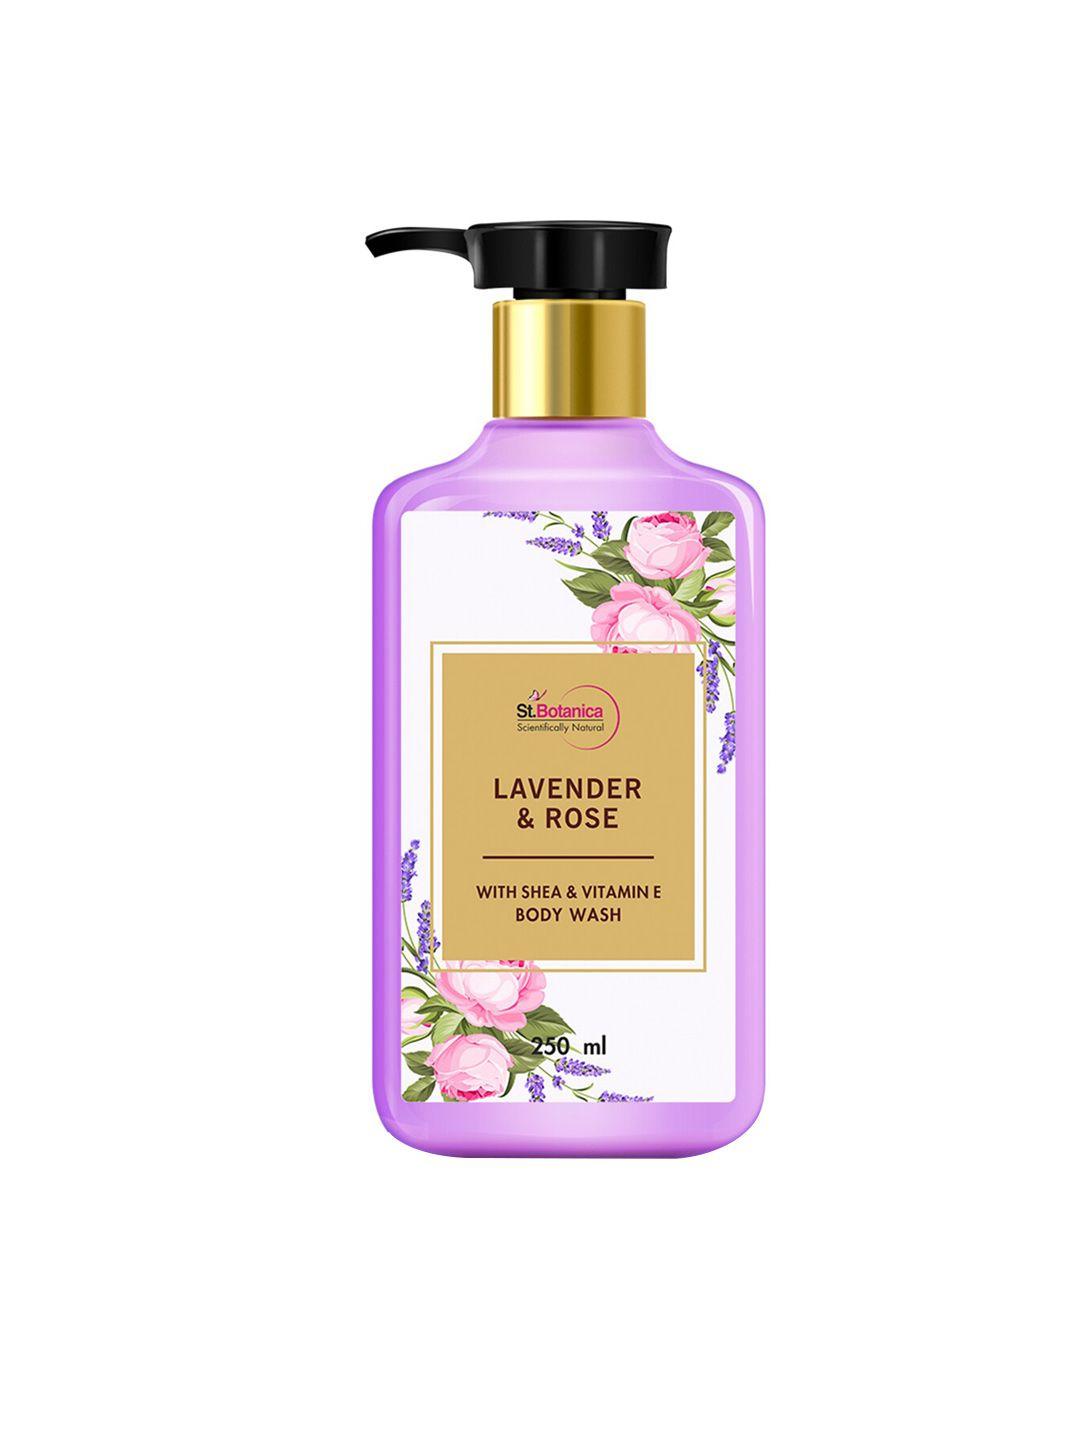 st.botanica lavender & rose body wash with shea & vitamin e shower gel 250 ml